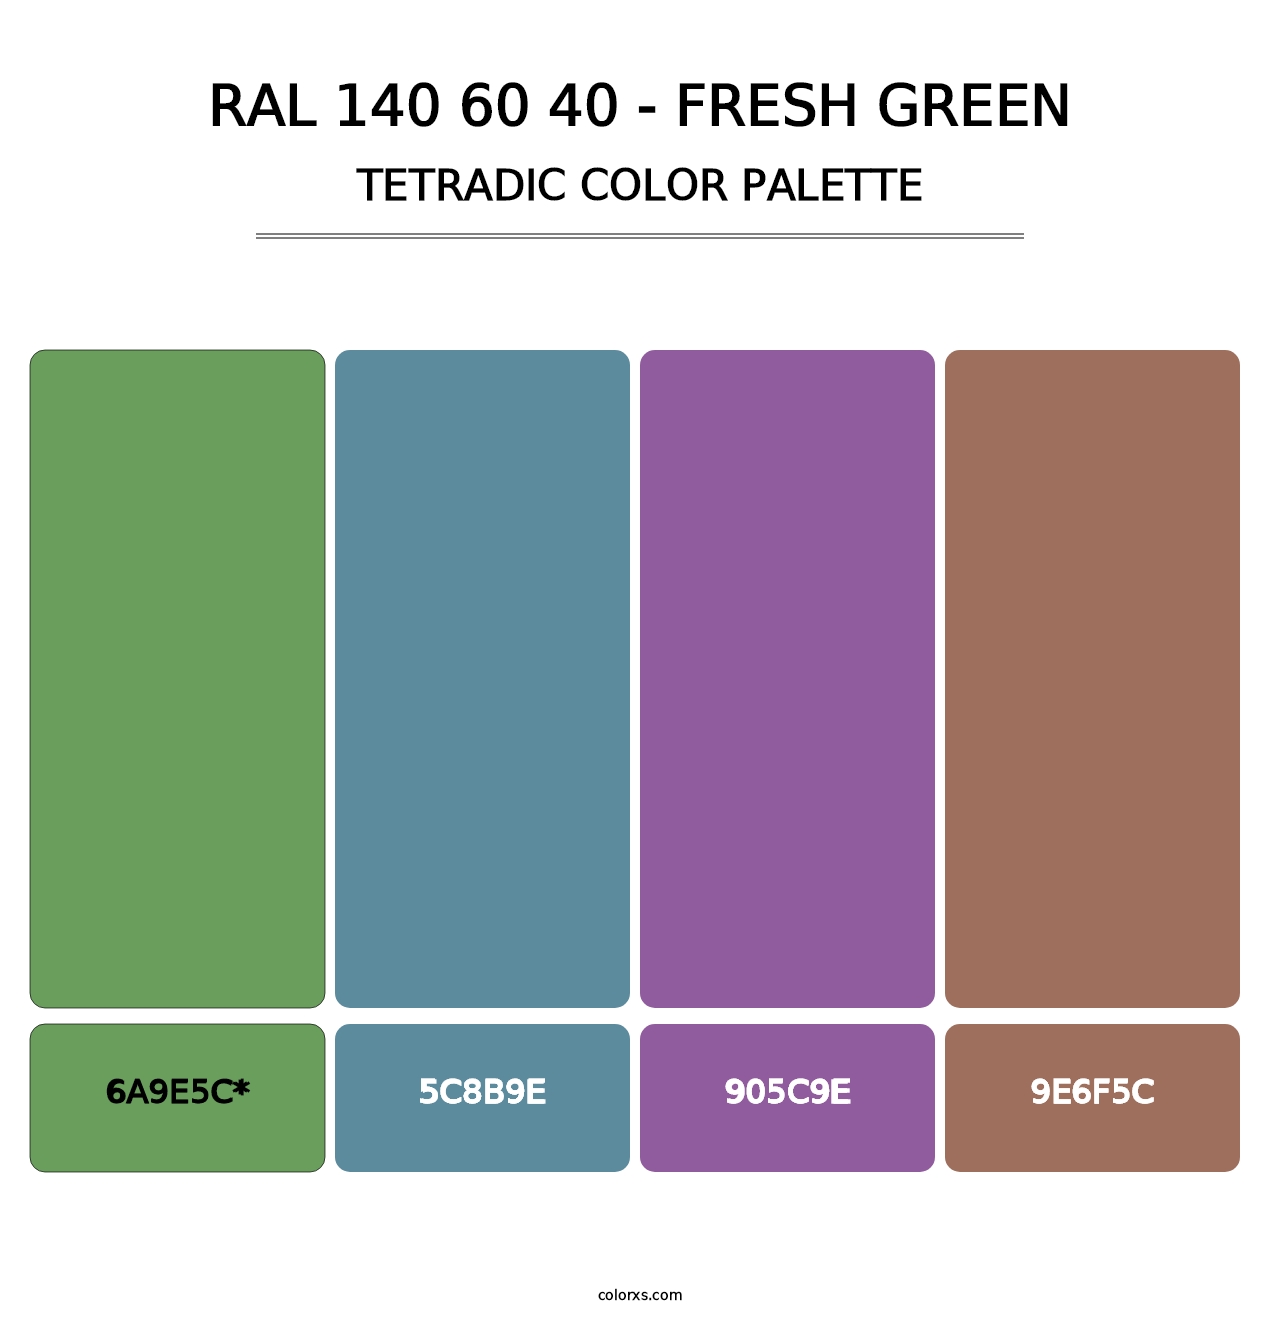 RAL 140 60 40 - Fresh Green - Tetradic Color Palette